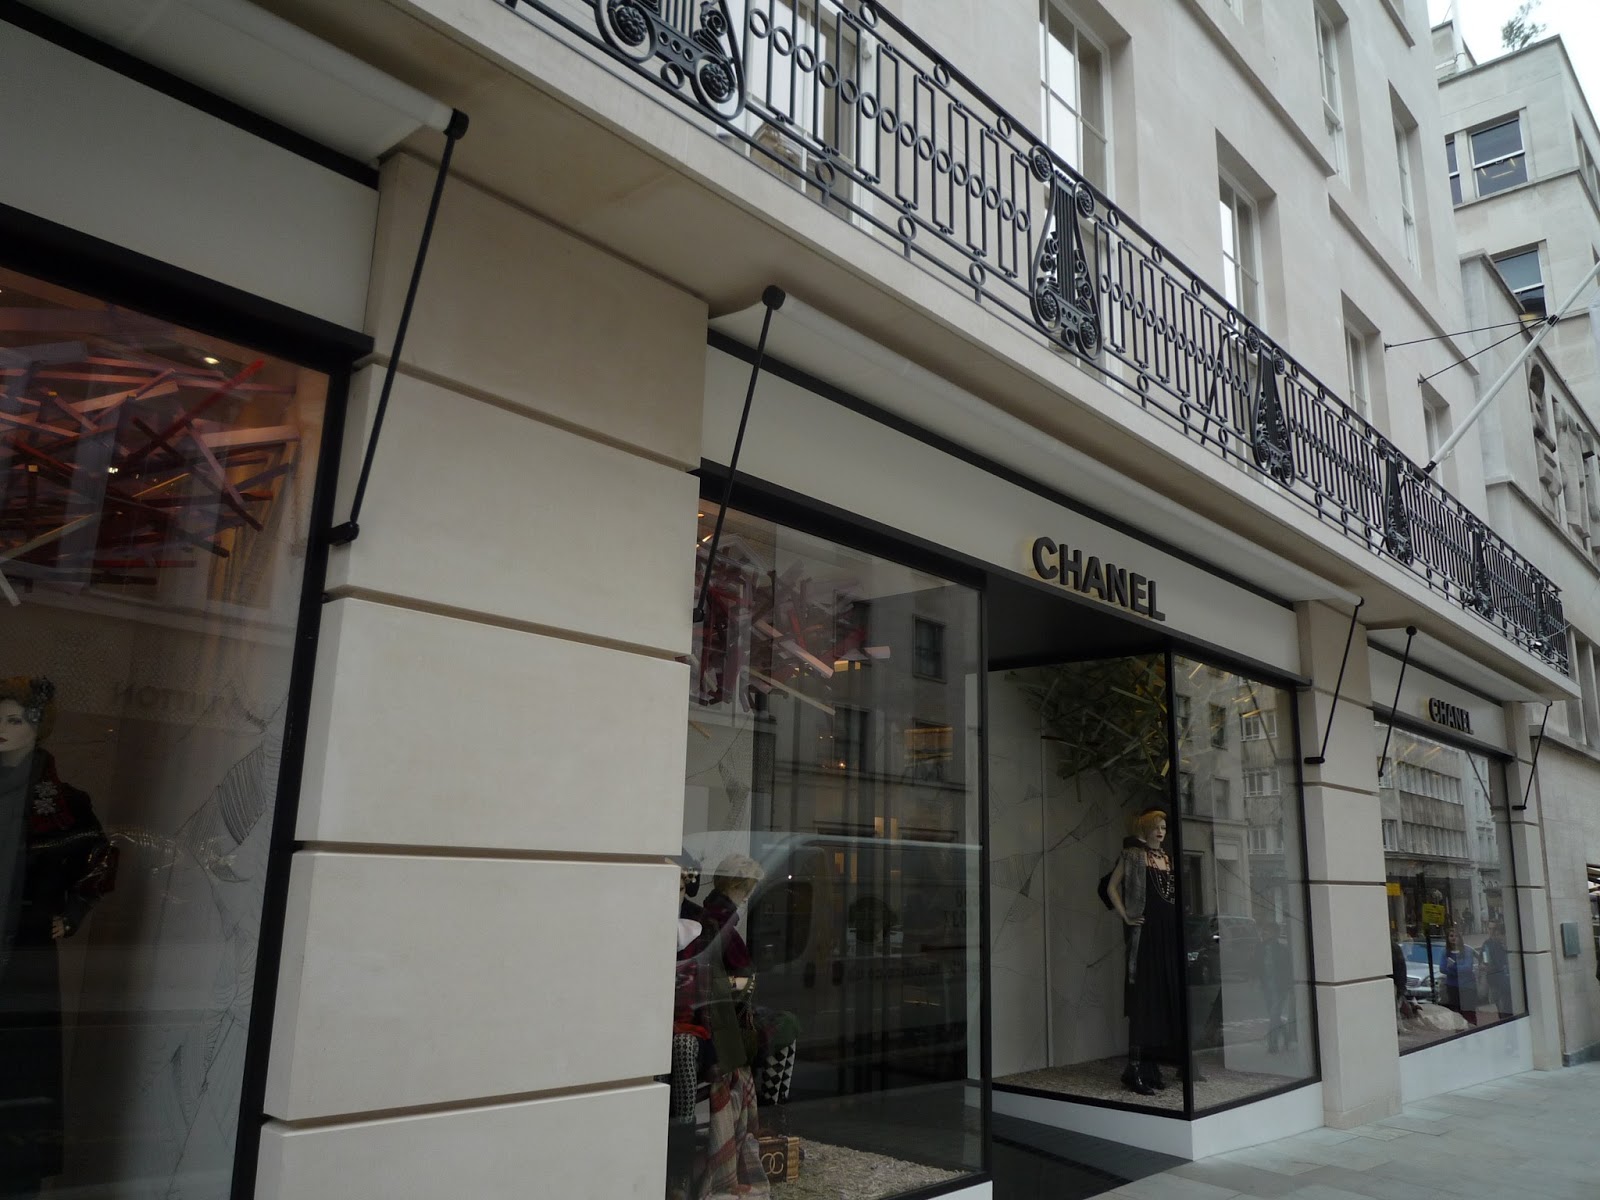 Chanel Flagship Store Windows on Bond Street London Photos